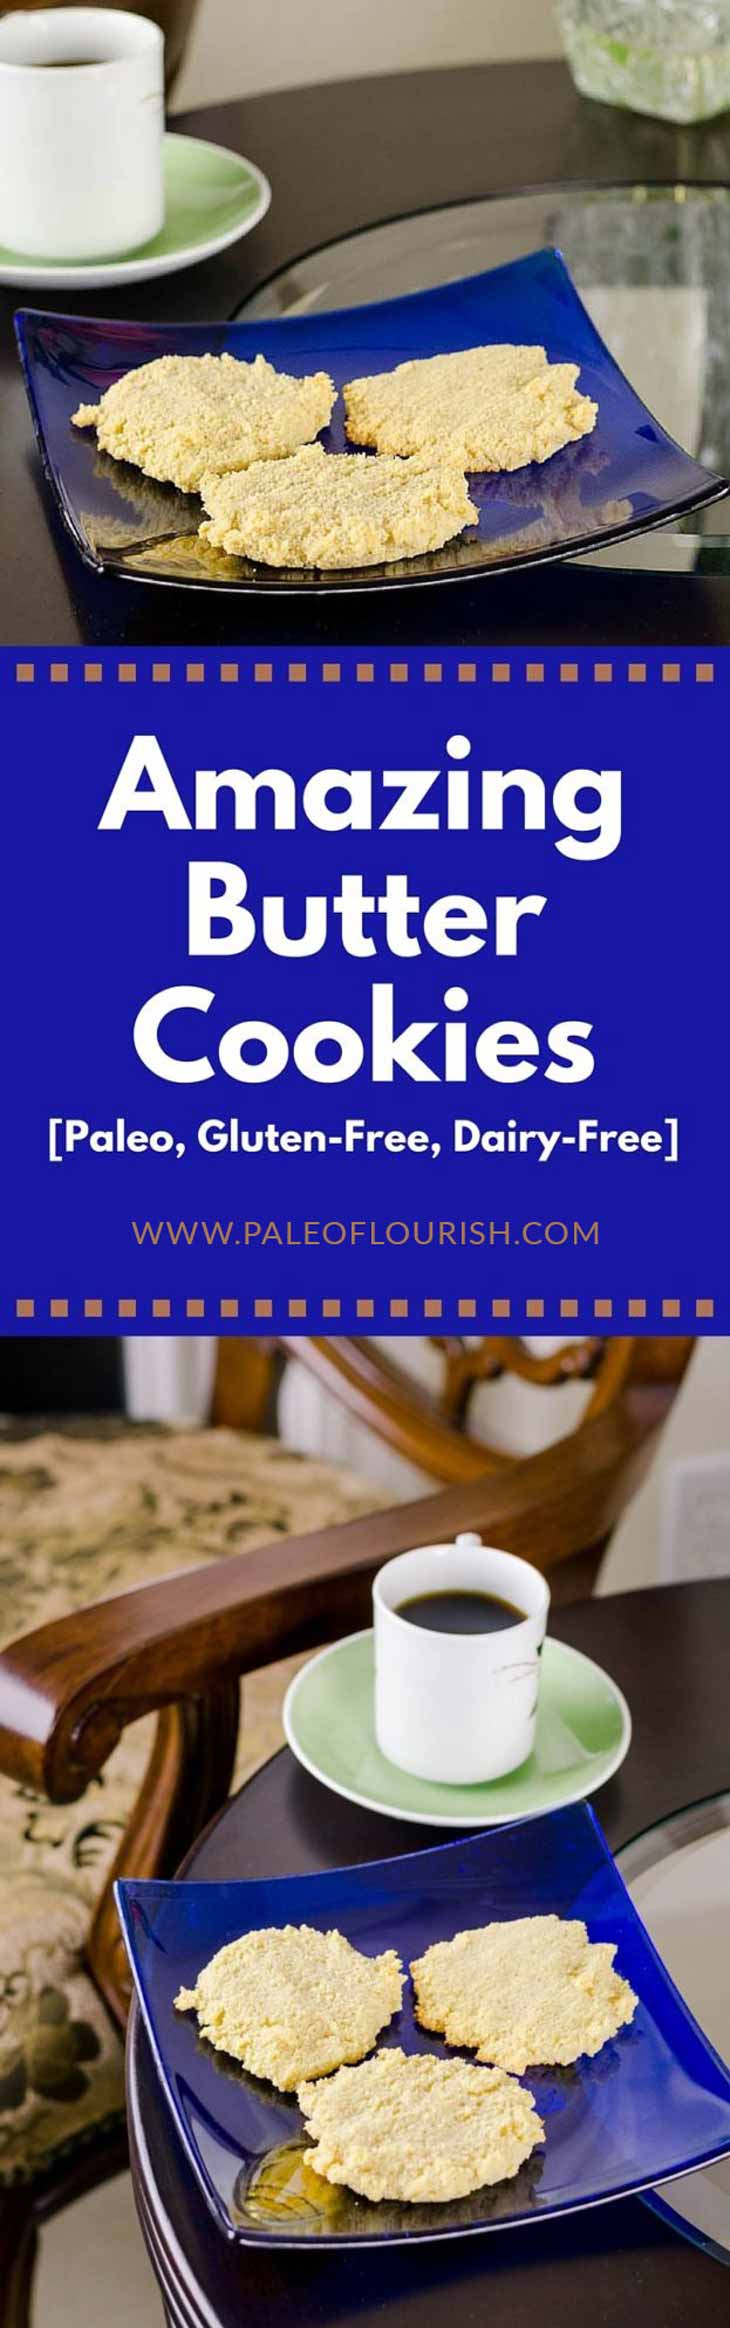 Amazing Butter Cookies Recipe [Paleo, Gluten-Free, Dairy-Free] #paleo #recipes #glutenfree https://paleoflourish.com/amazing-butter-cookies-recipe-paleo-gf-dairyfree